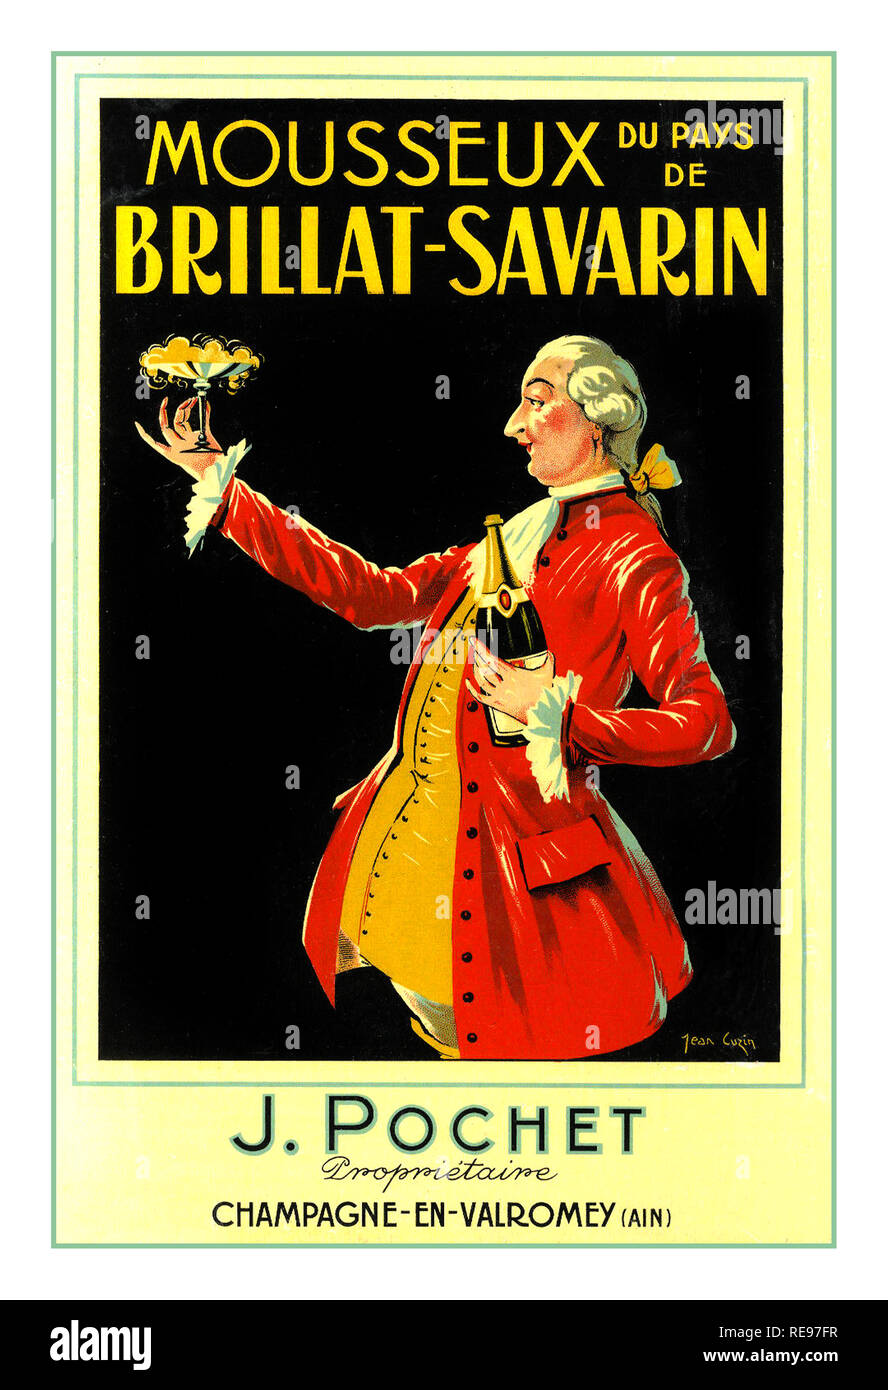 L'annata 1900 Champagne Poster J Pochet Champagne-En Valromey AIN Mousseux du Pays de Brillat-Savarin Francia Foto Stock